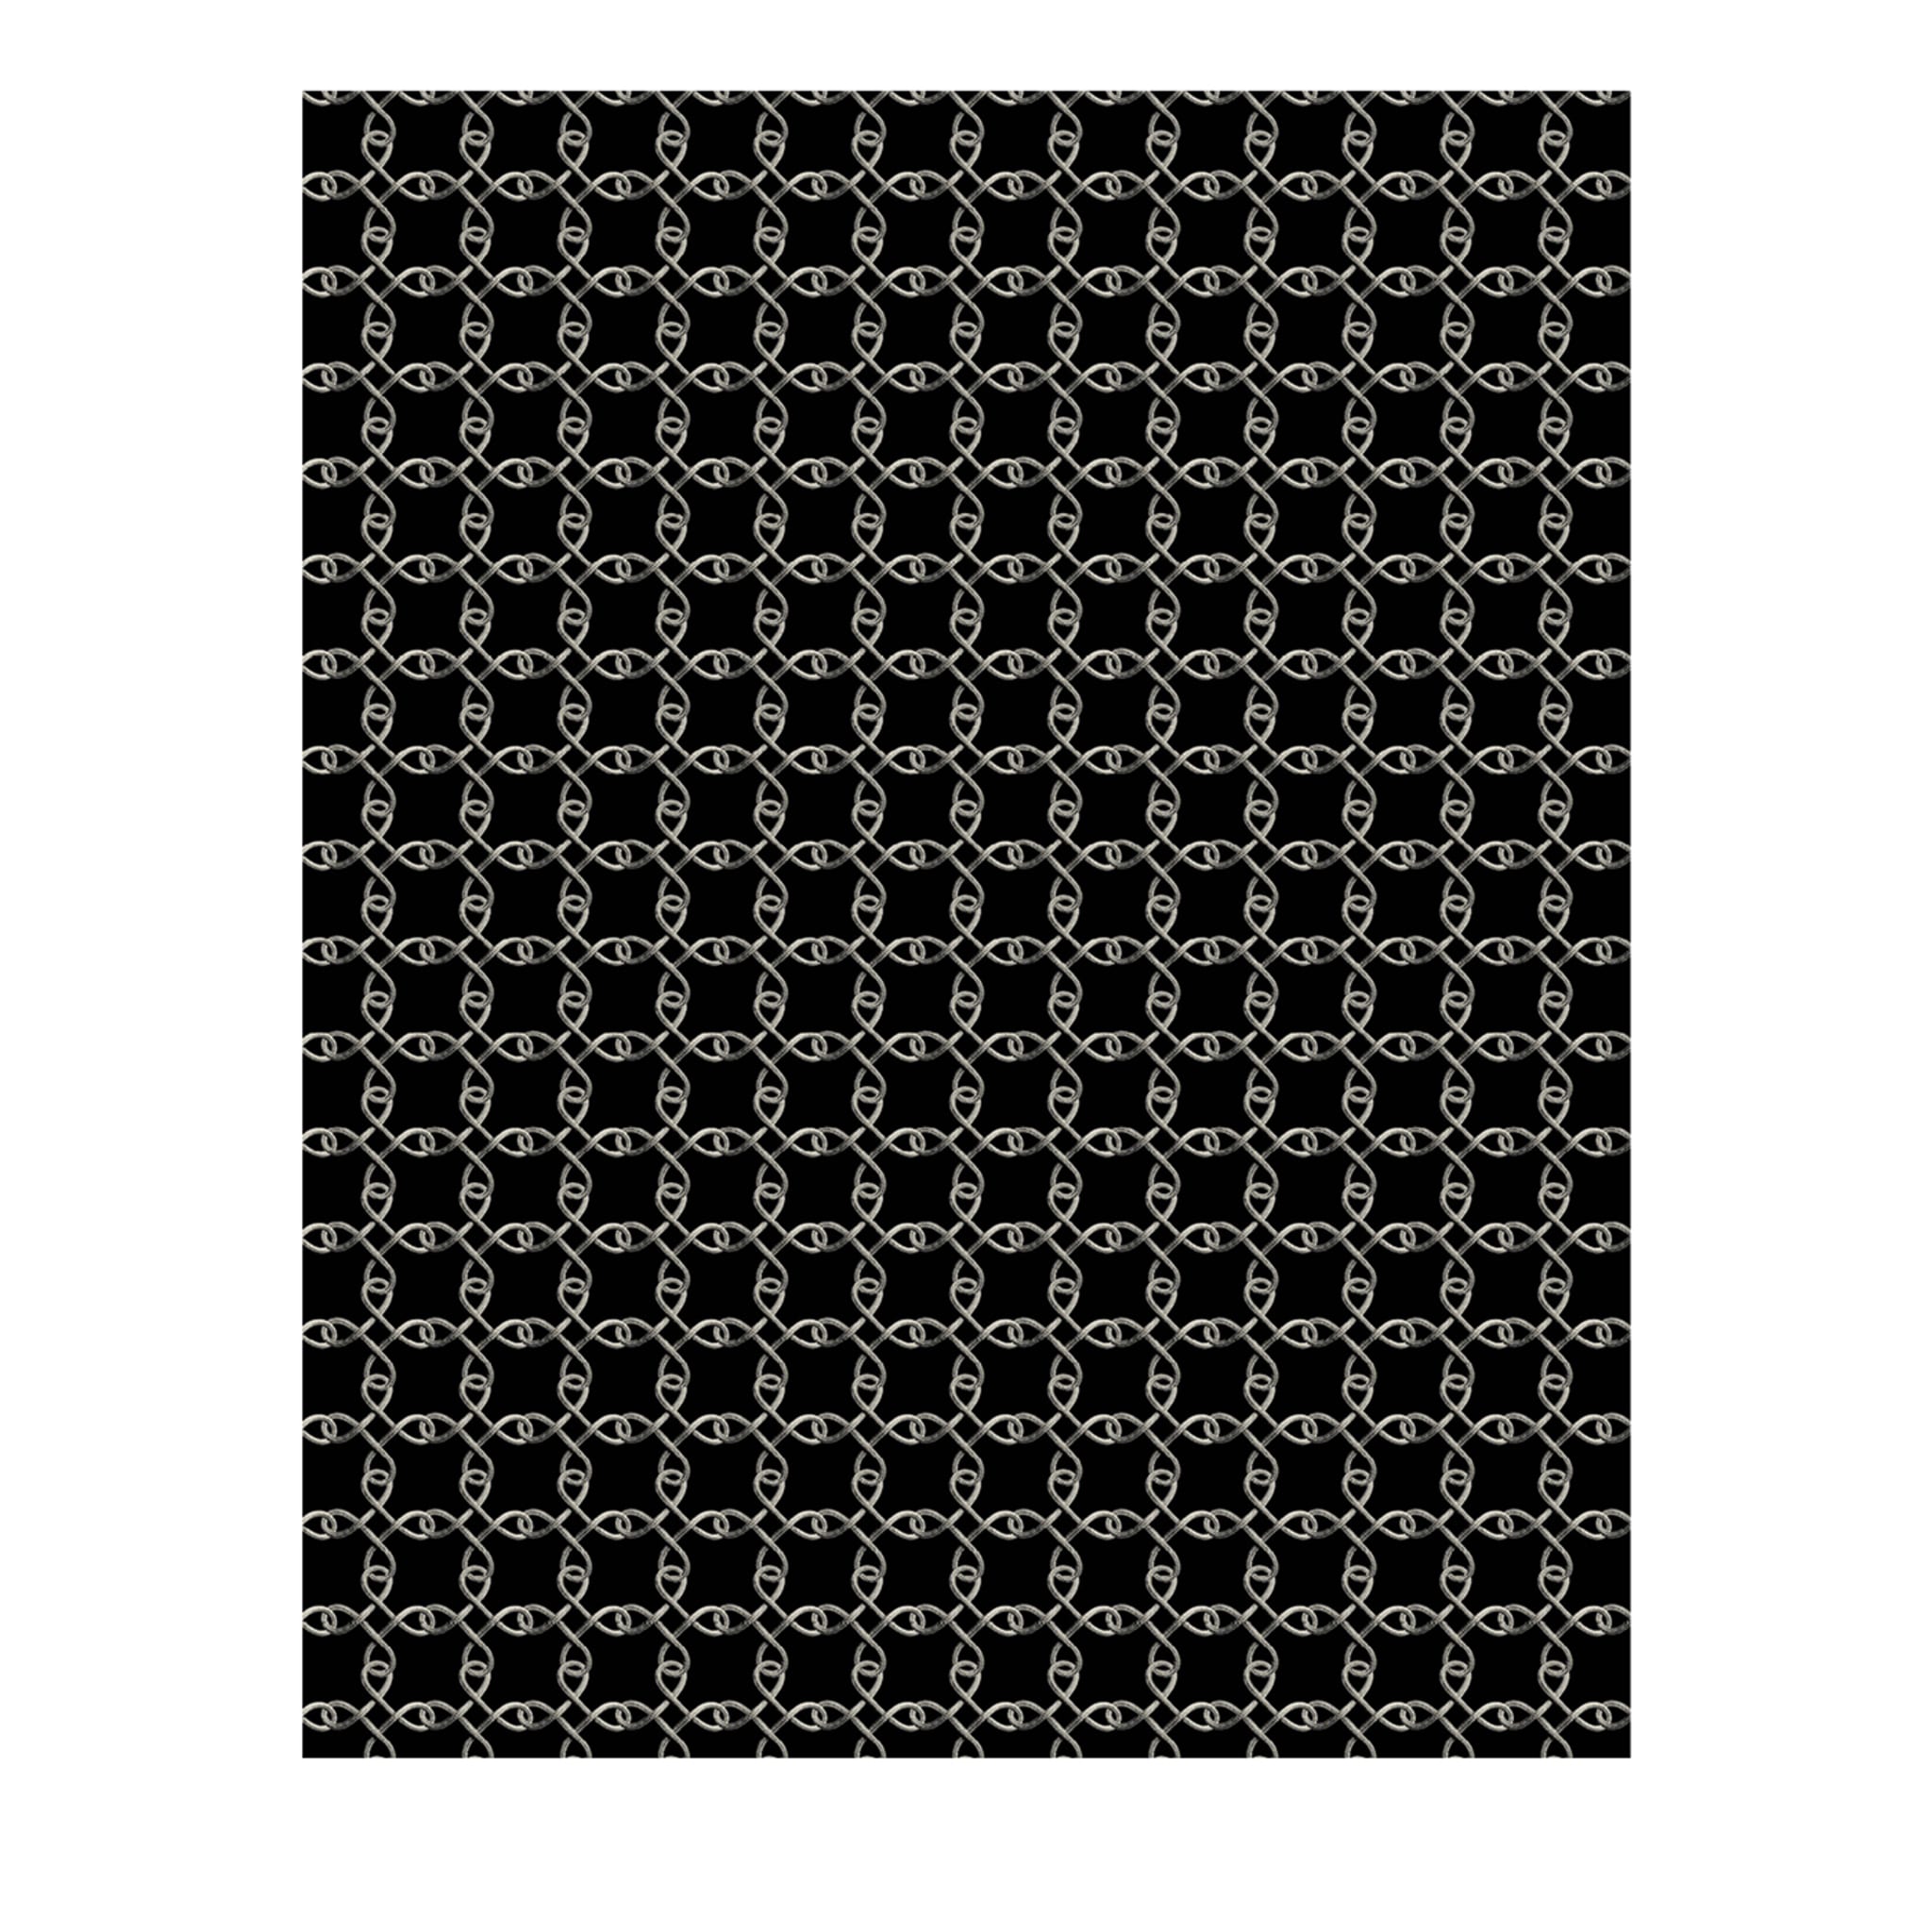 Knot White & Black Wallpaper  - Main view